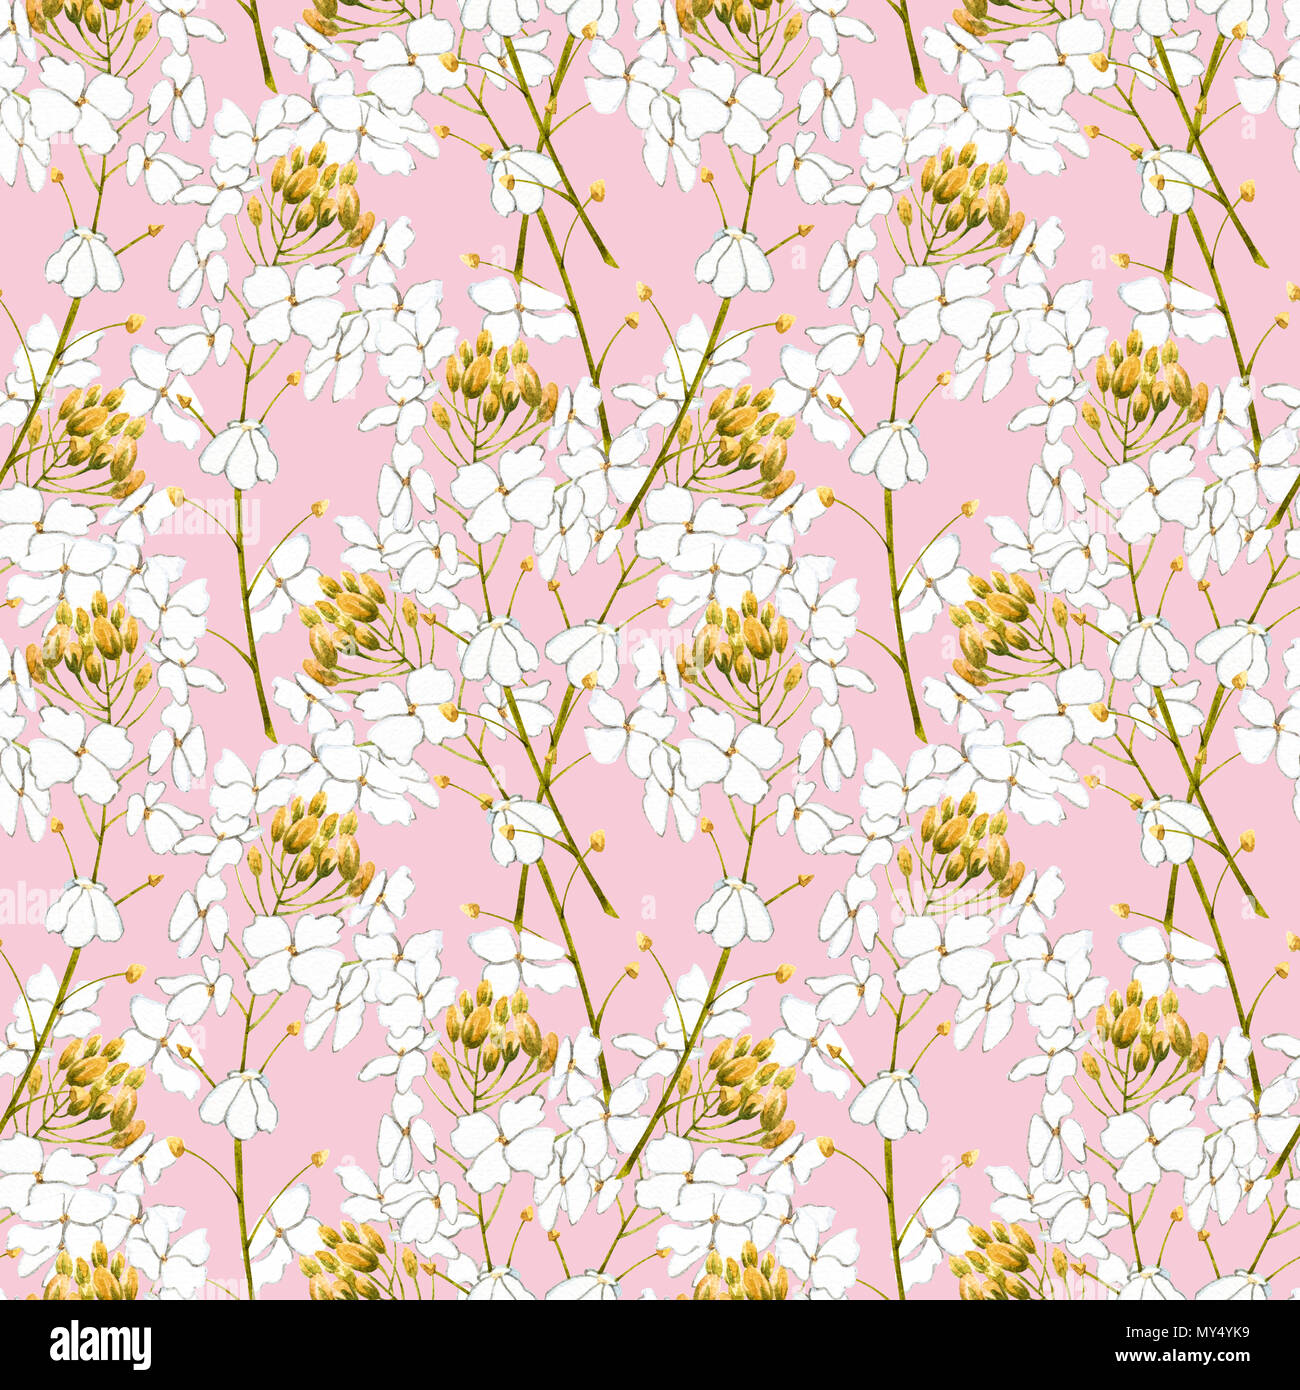 Watercolor horseradish flowers. Seamless pattern. Botanical illustration of organic, eco plant. Illustration For Food Design. Stock Photo